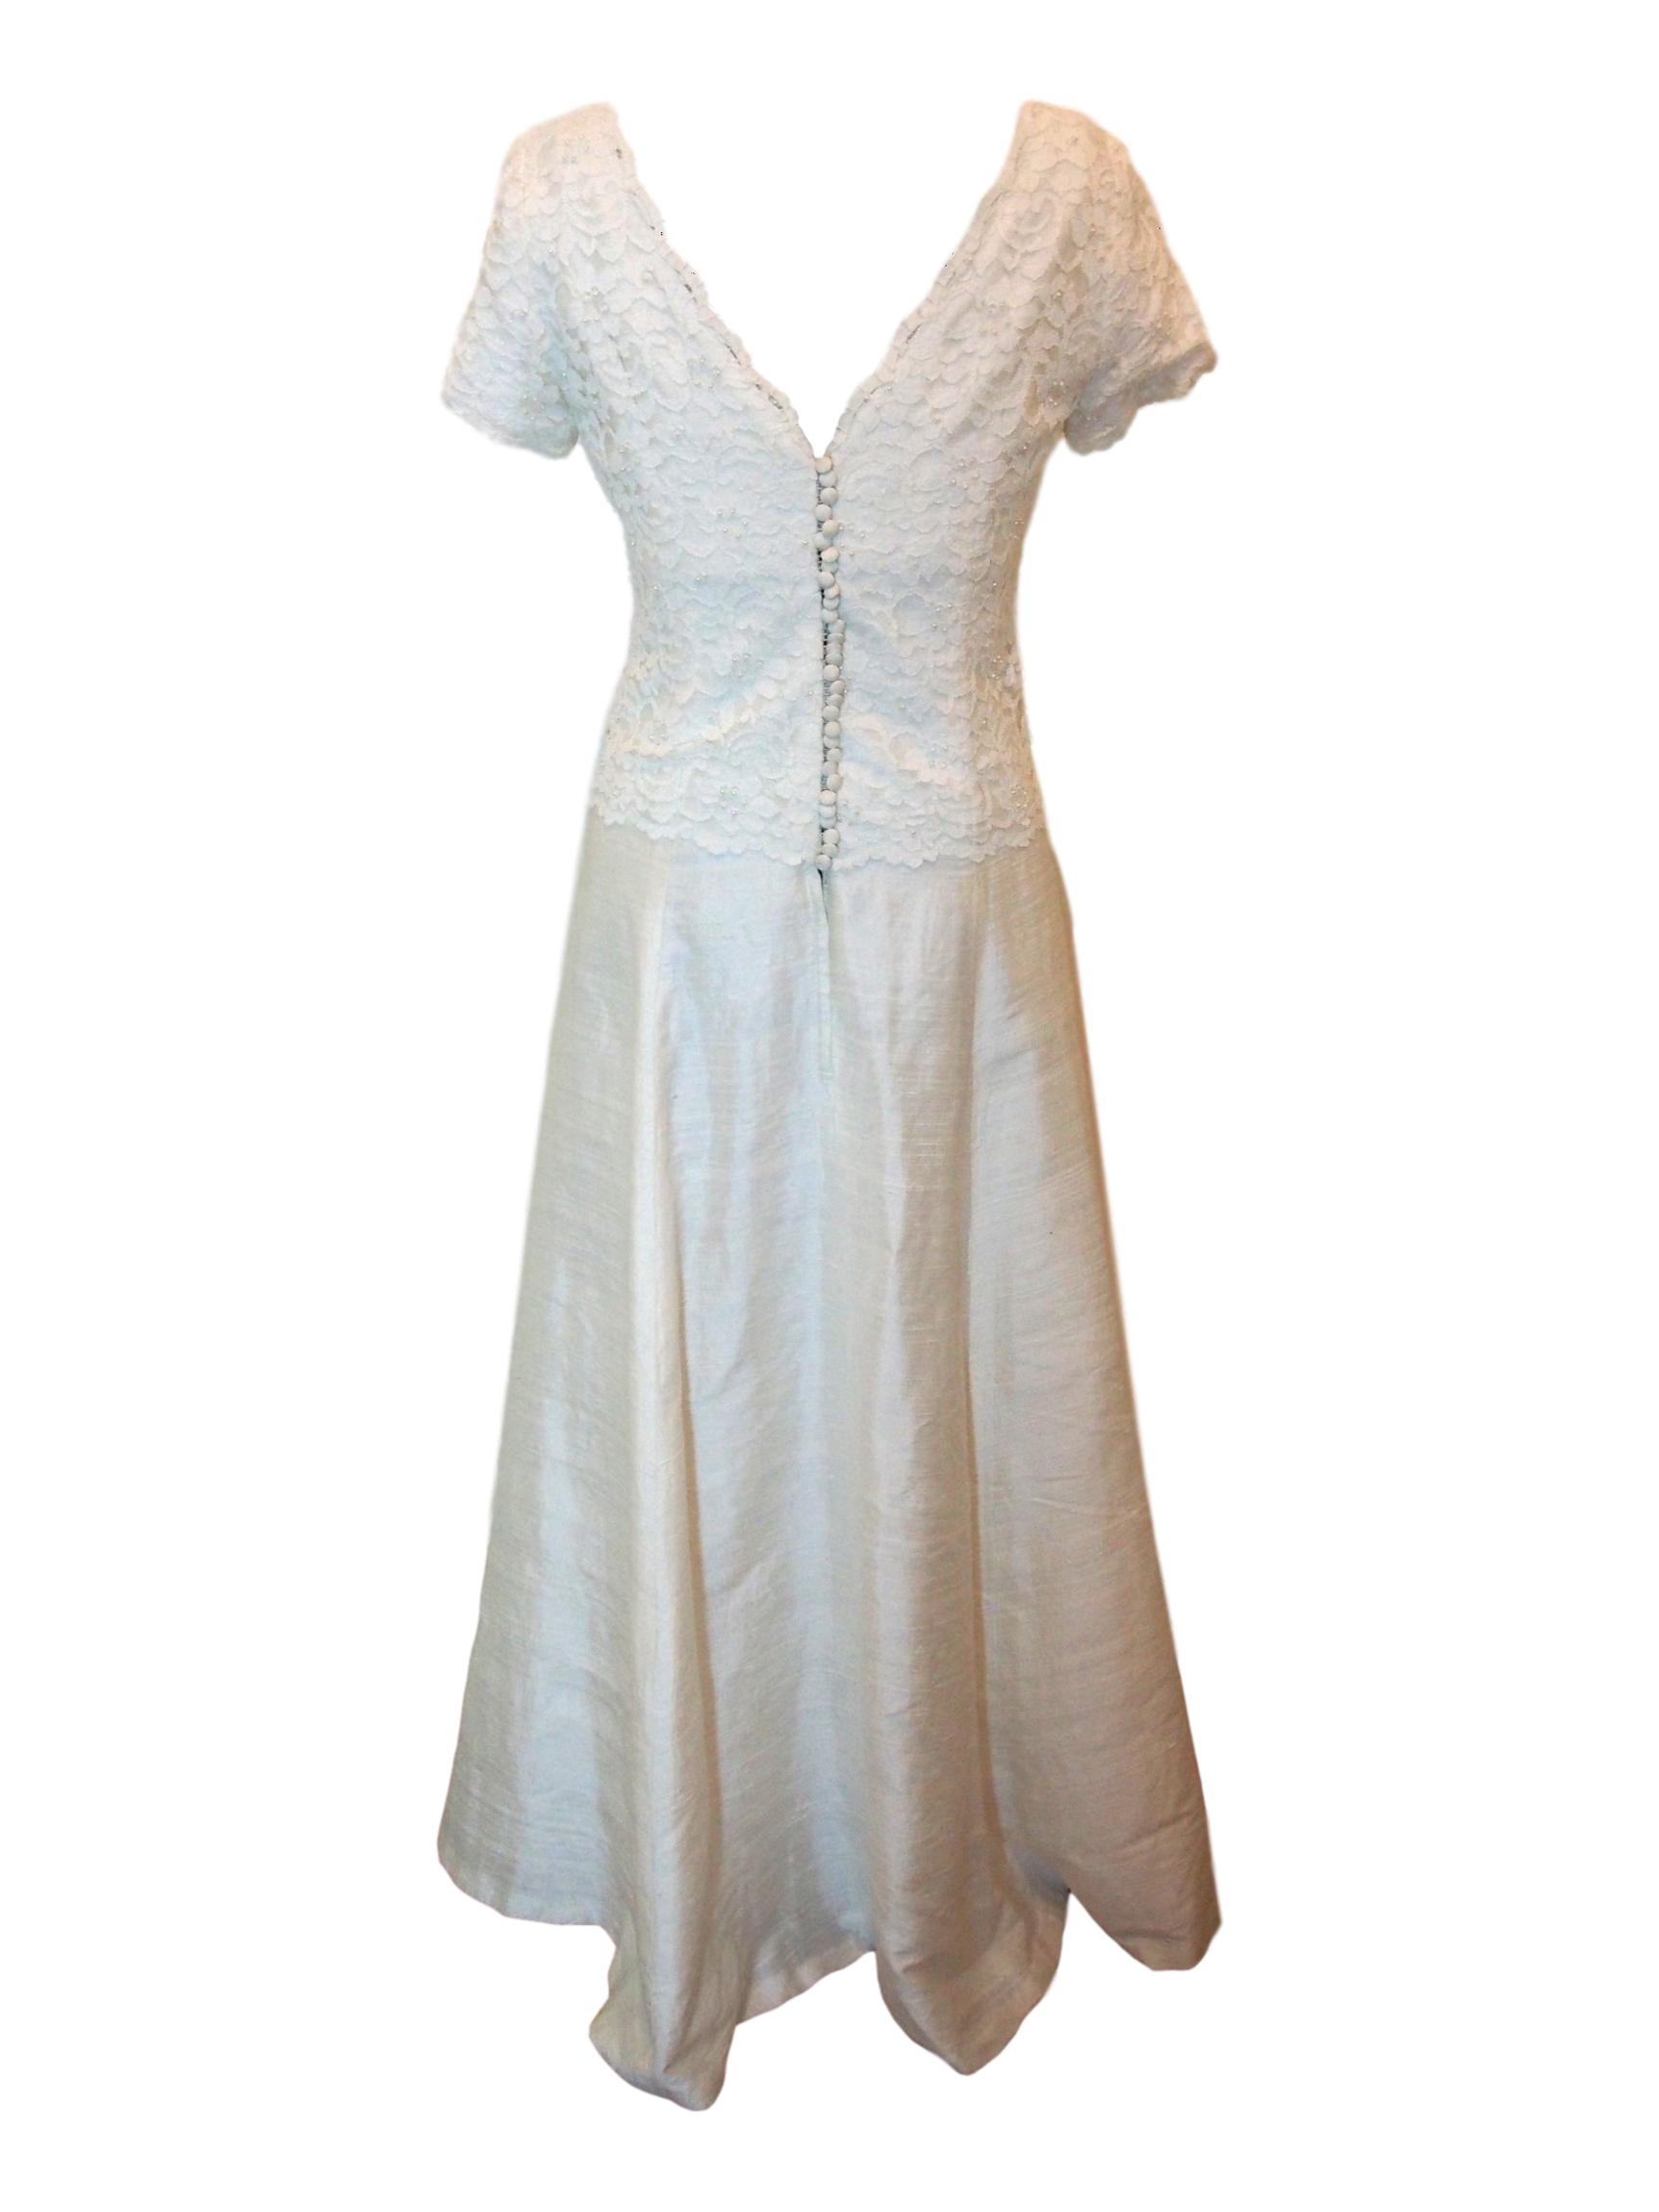 Raw Silk Vintage Wedding Dress | Bertie | Vintage Aisle